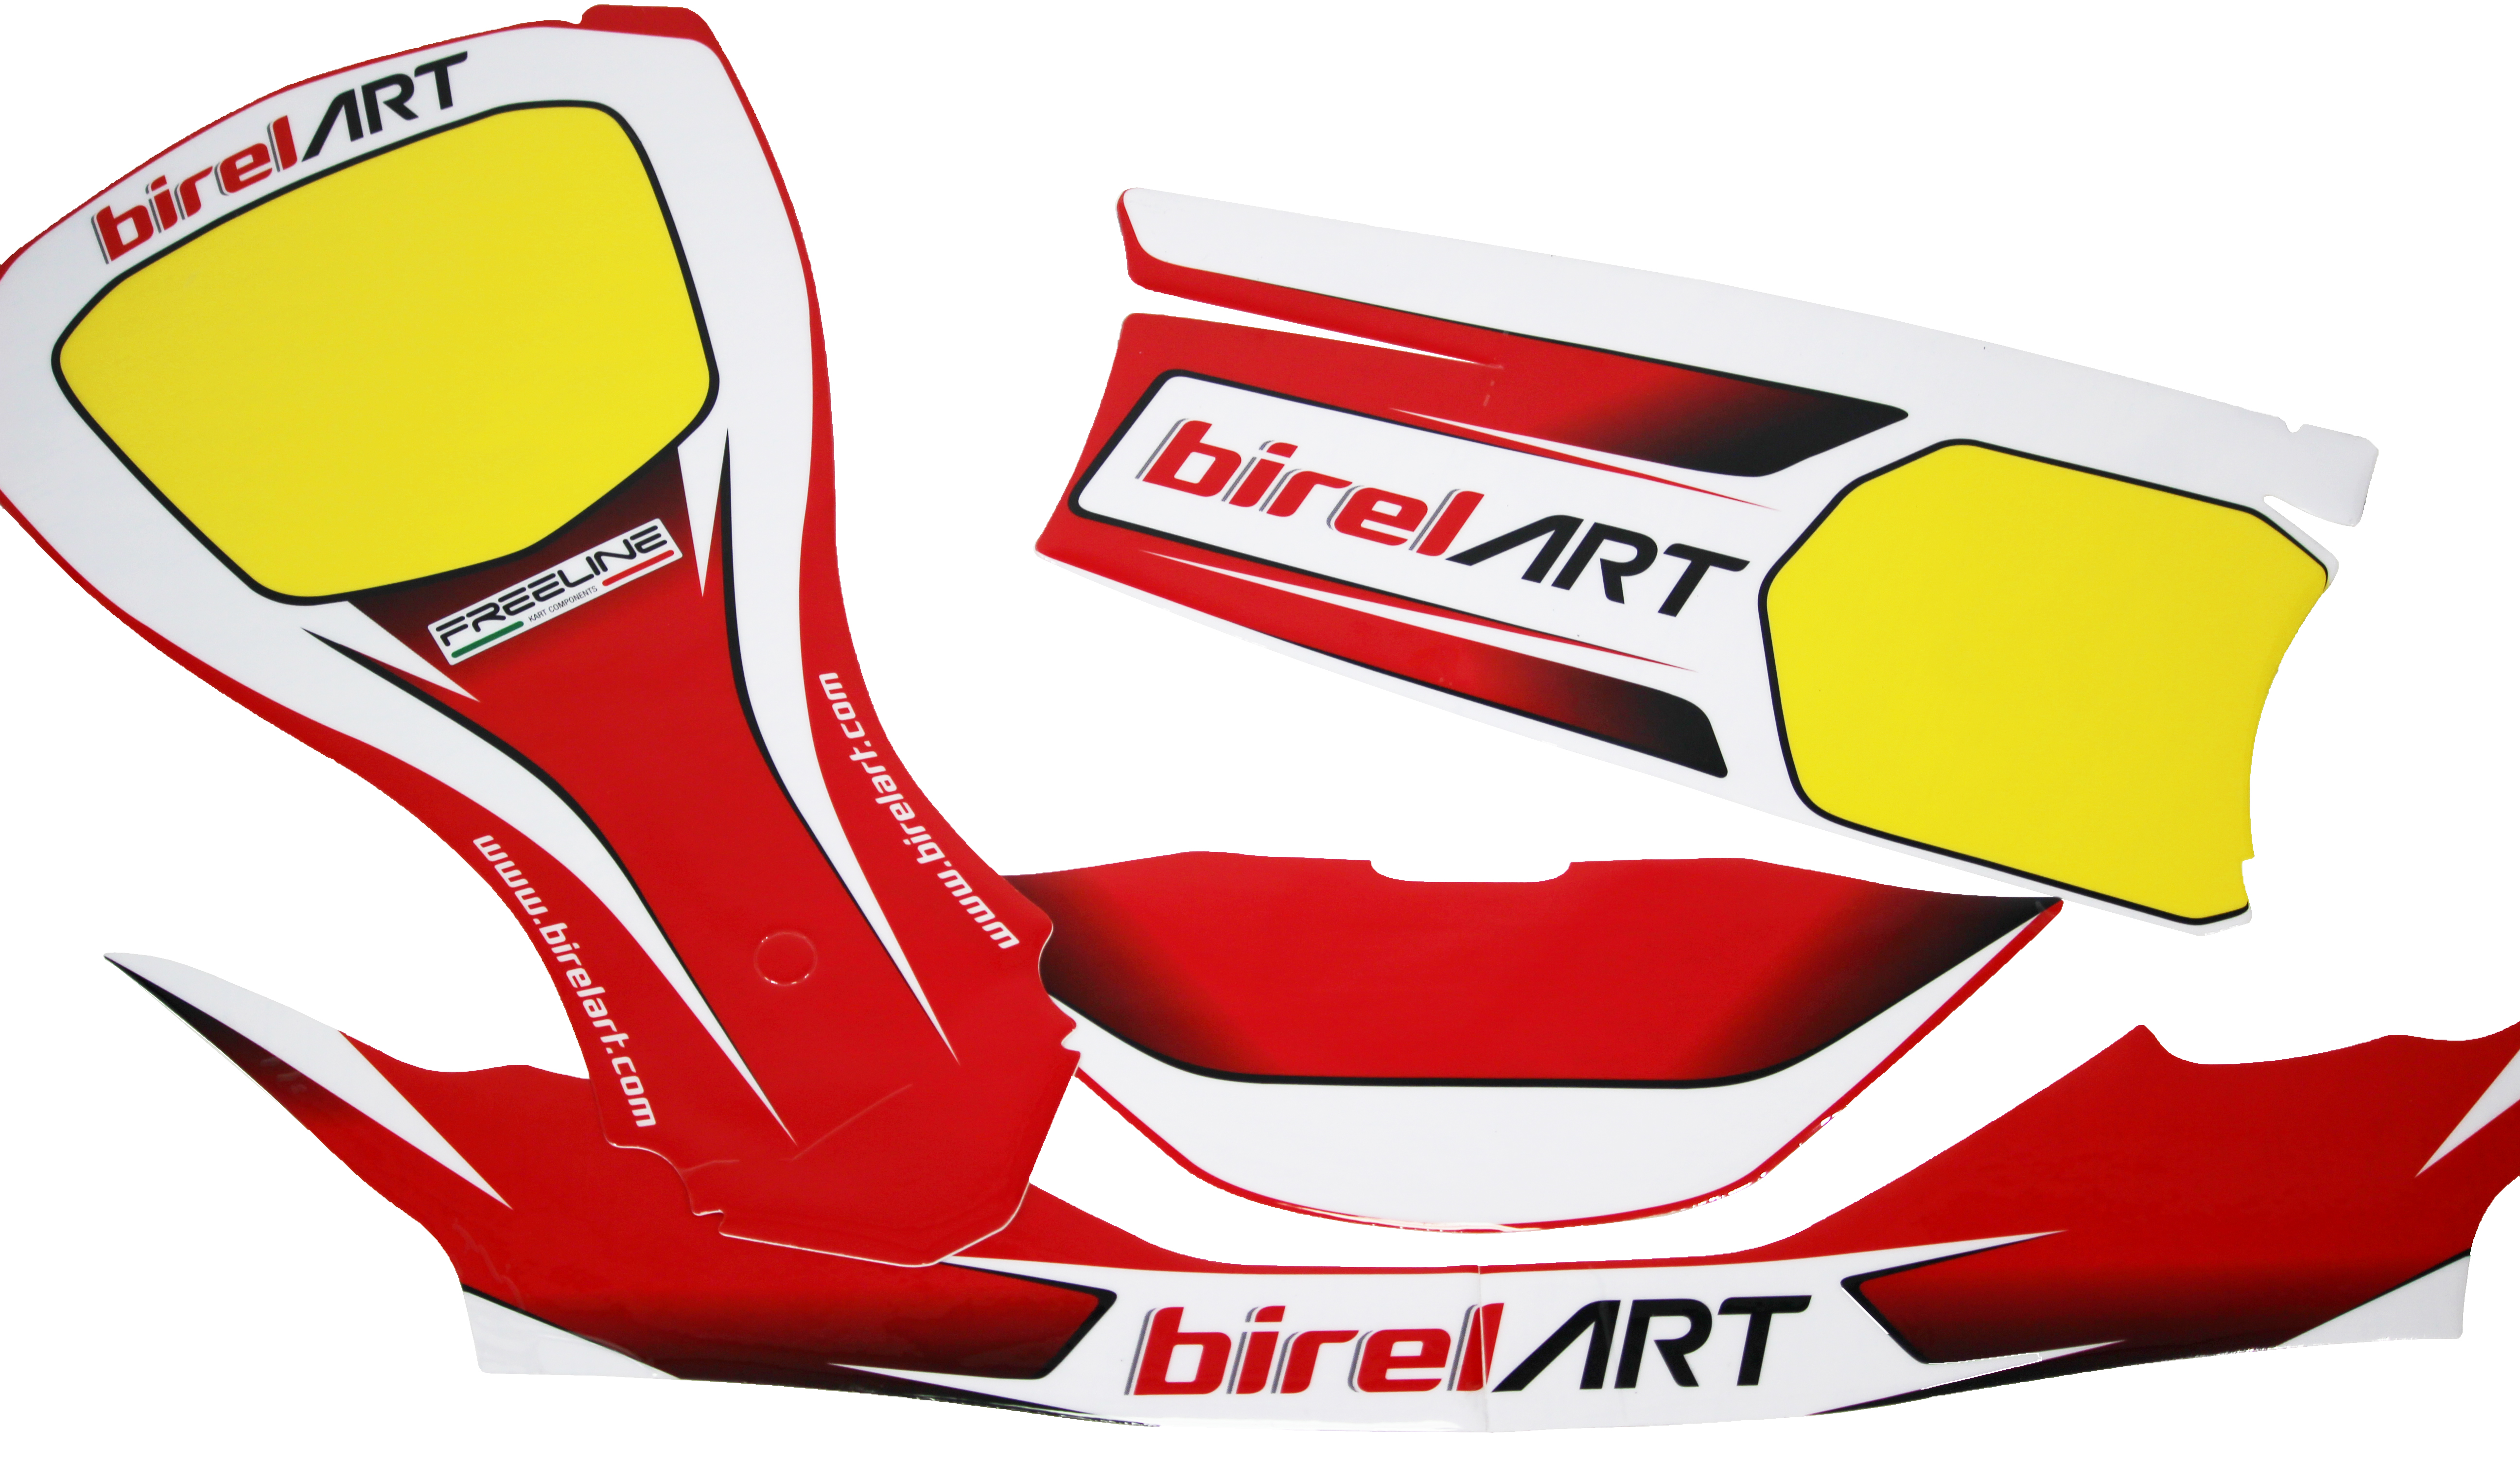 FREELINE Birel Art Style Complet Kart Kit Autocollant-Karting-Rotax dénomination 